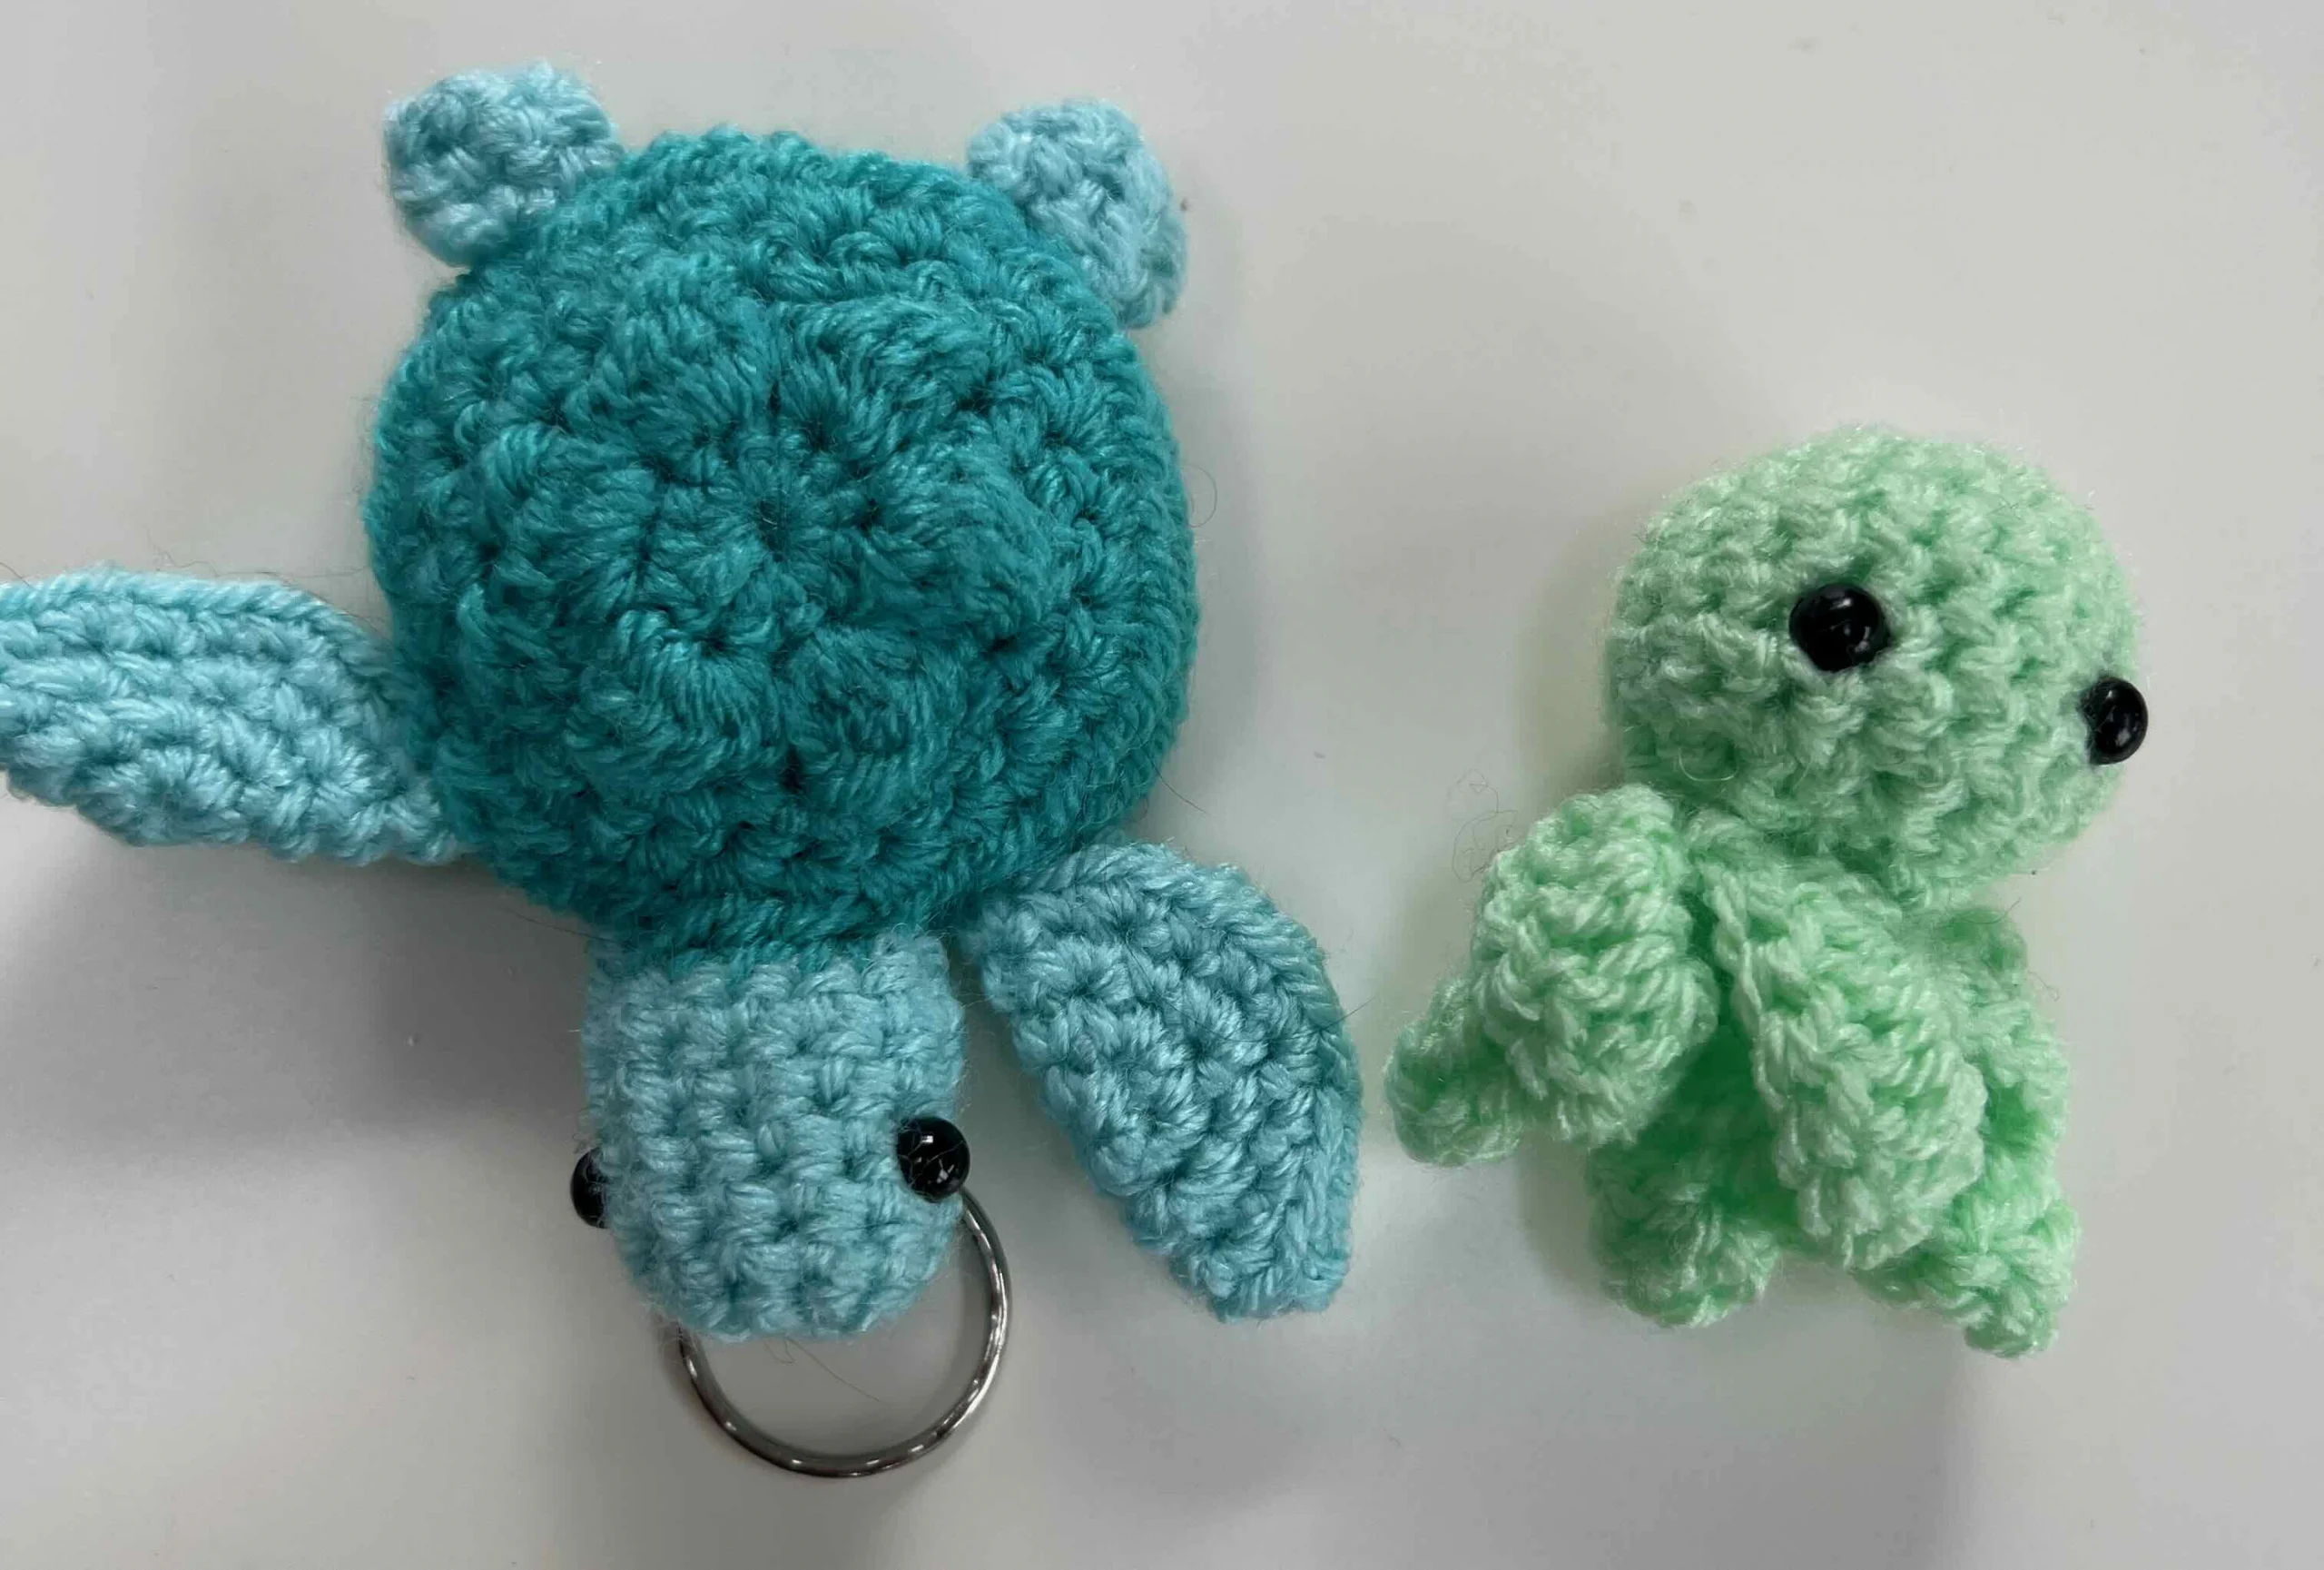 crochet jellyfish and crochet turtle pattern